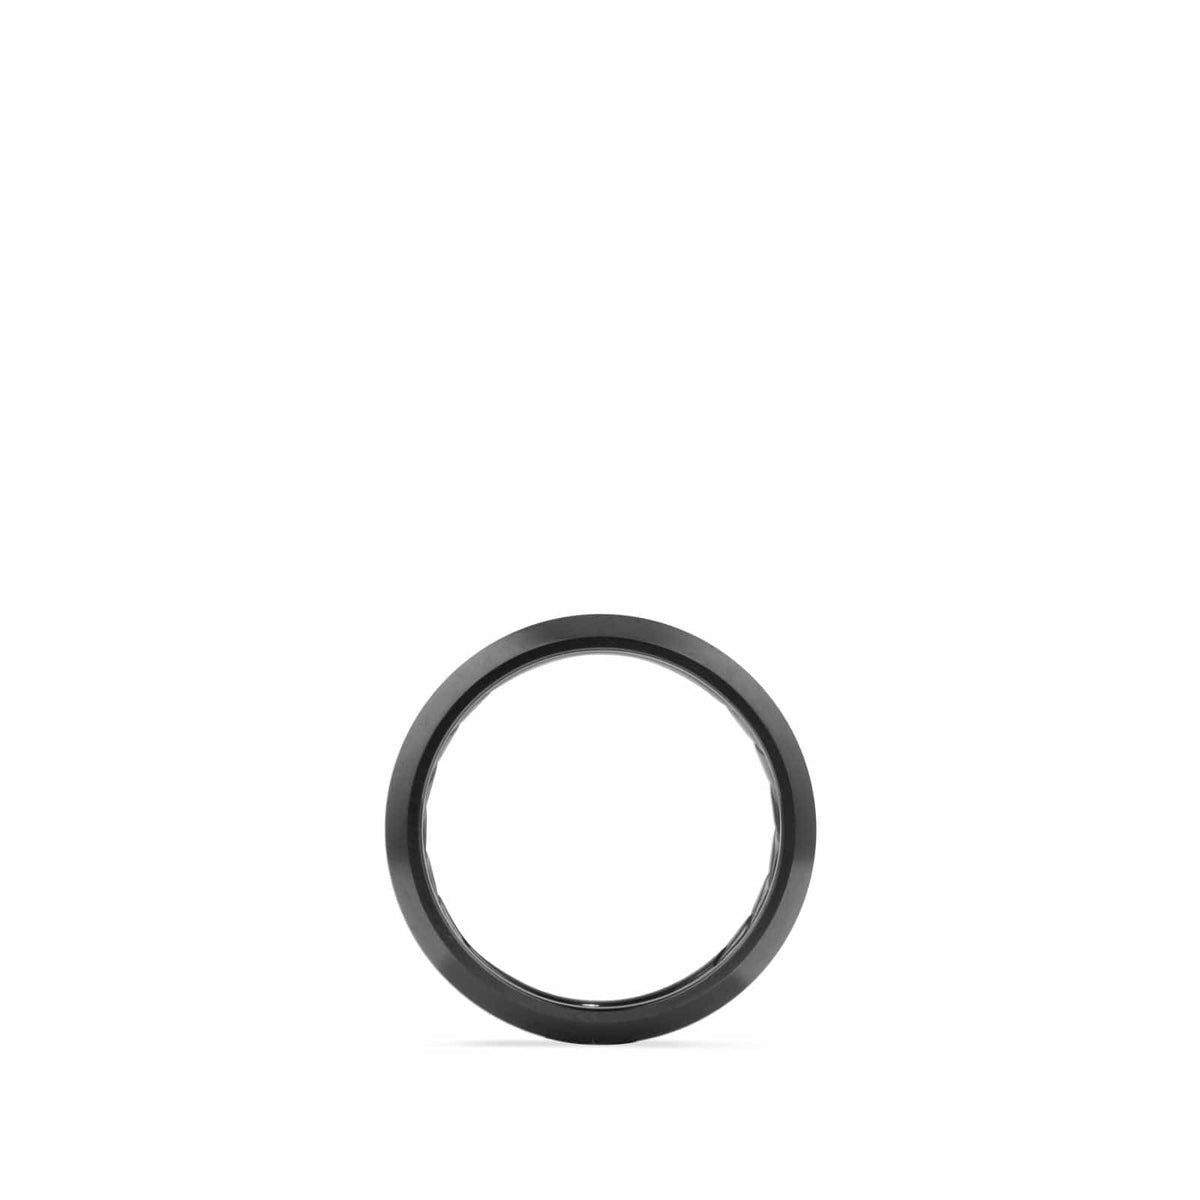 Beveled Band Ring in Black Titanium, 6mm